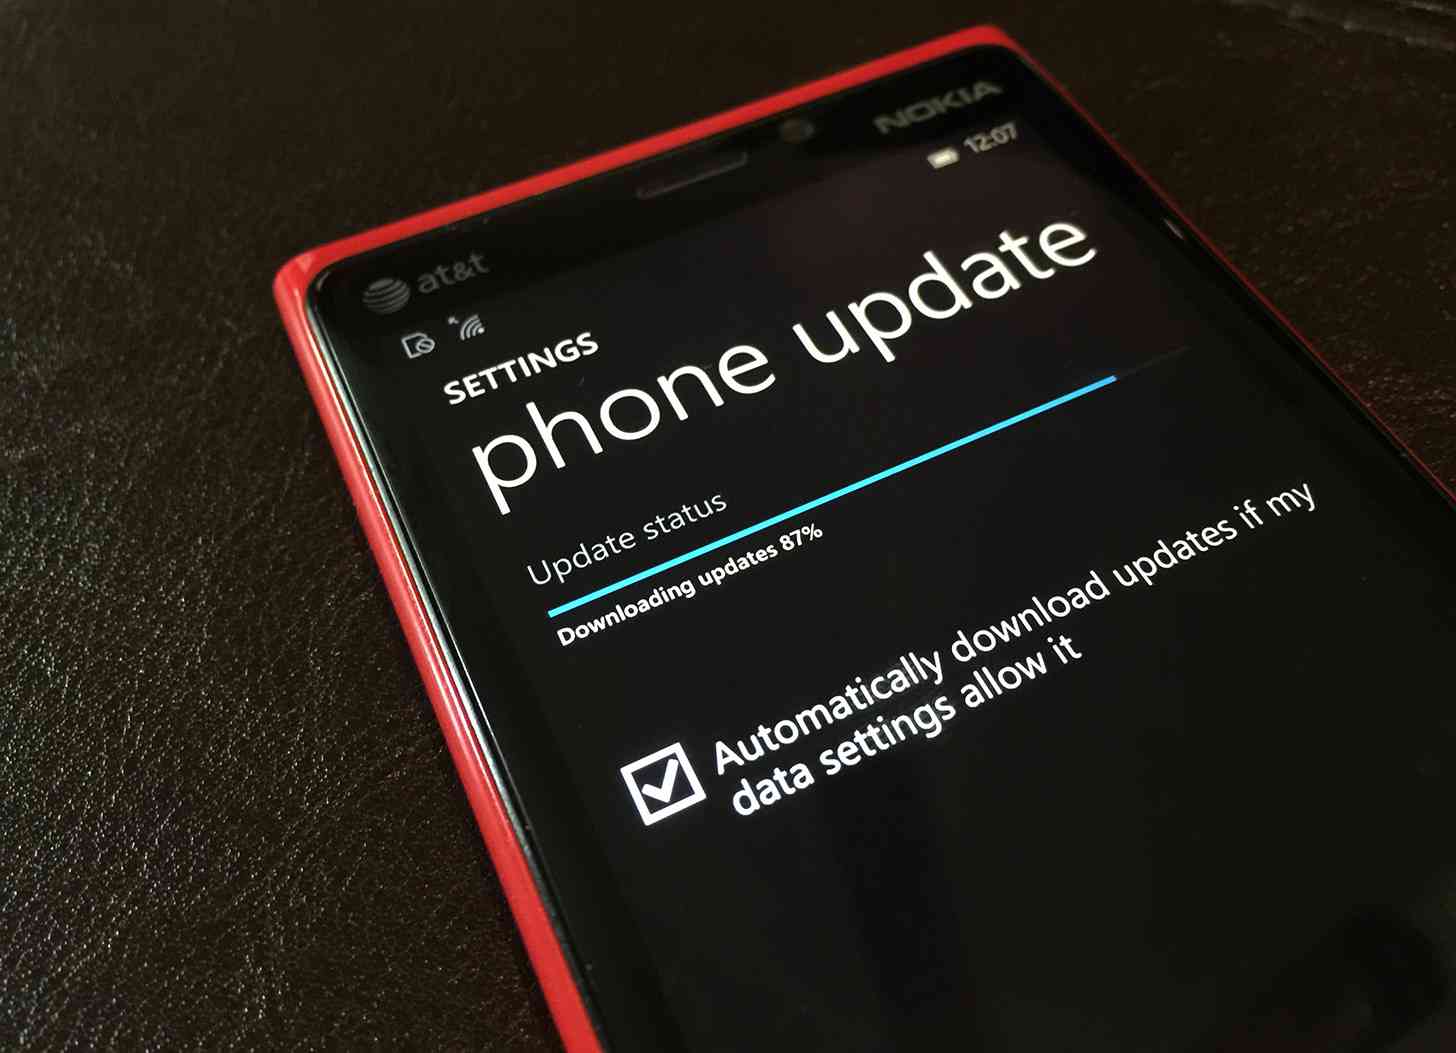 Windows 10 Mobile update